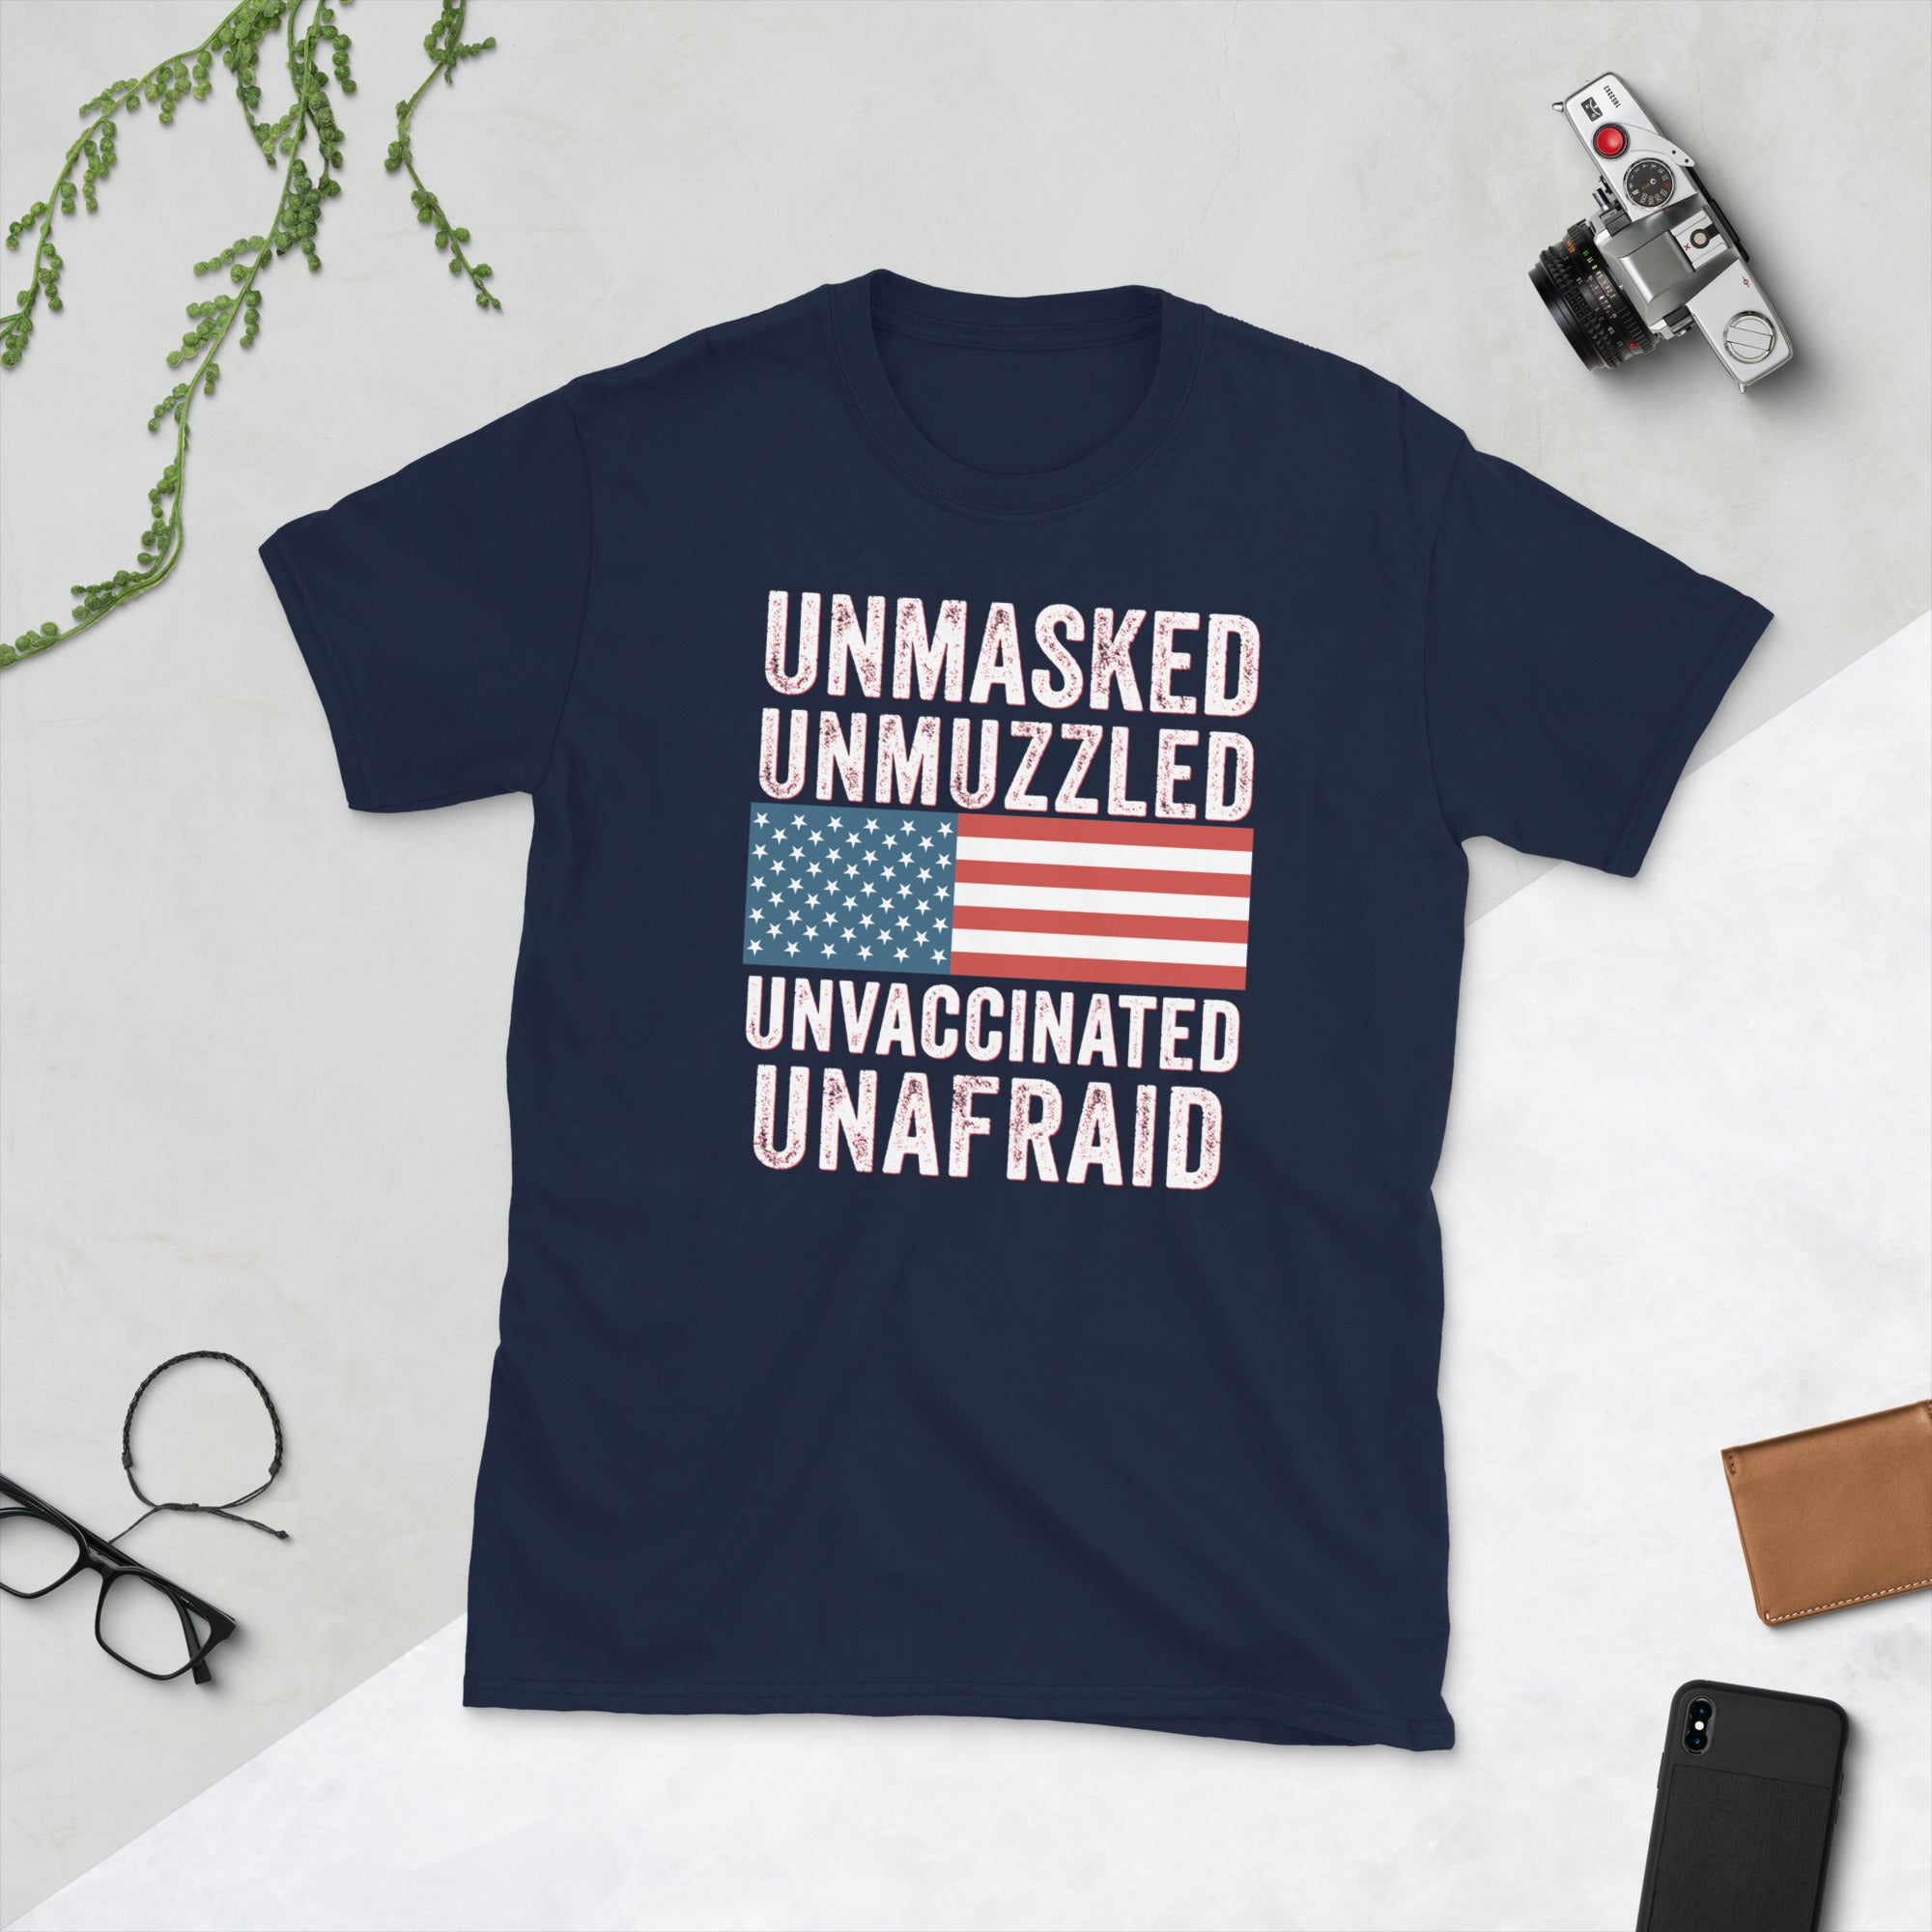 Unmasked. Unmuzzled. Unvaccinated. Unafraid. Shirt, Antimask Shirt, Freedom Shirt, Make American Unmasked, Unmask america, USA Flag Patriot - Madeinsea©